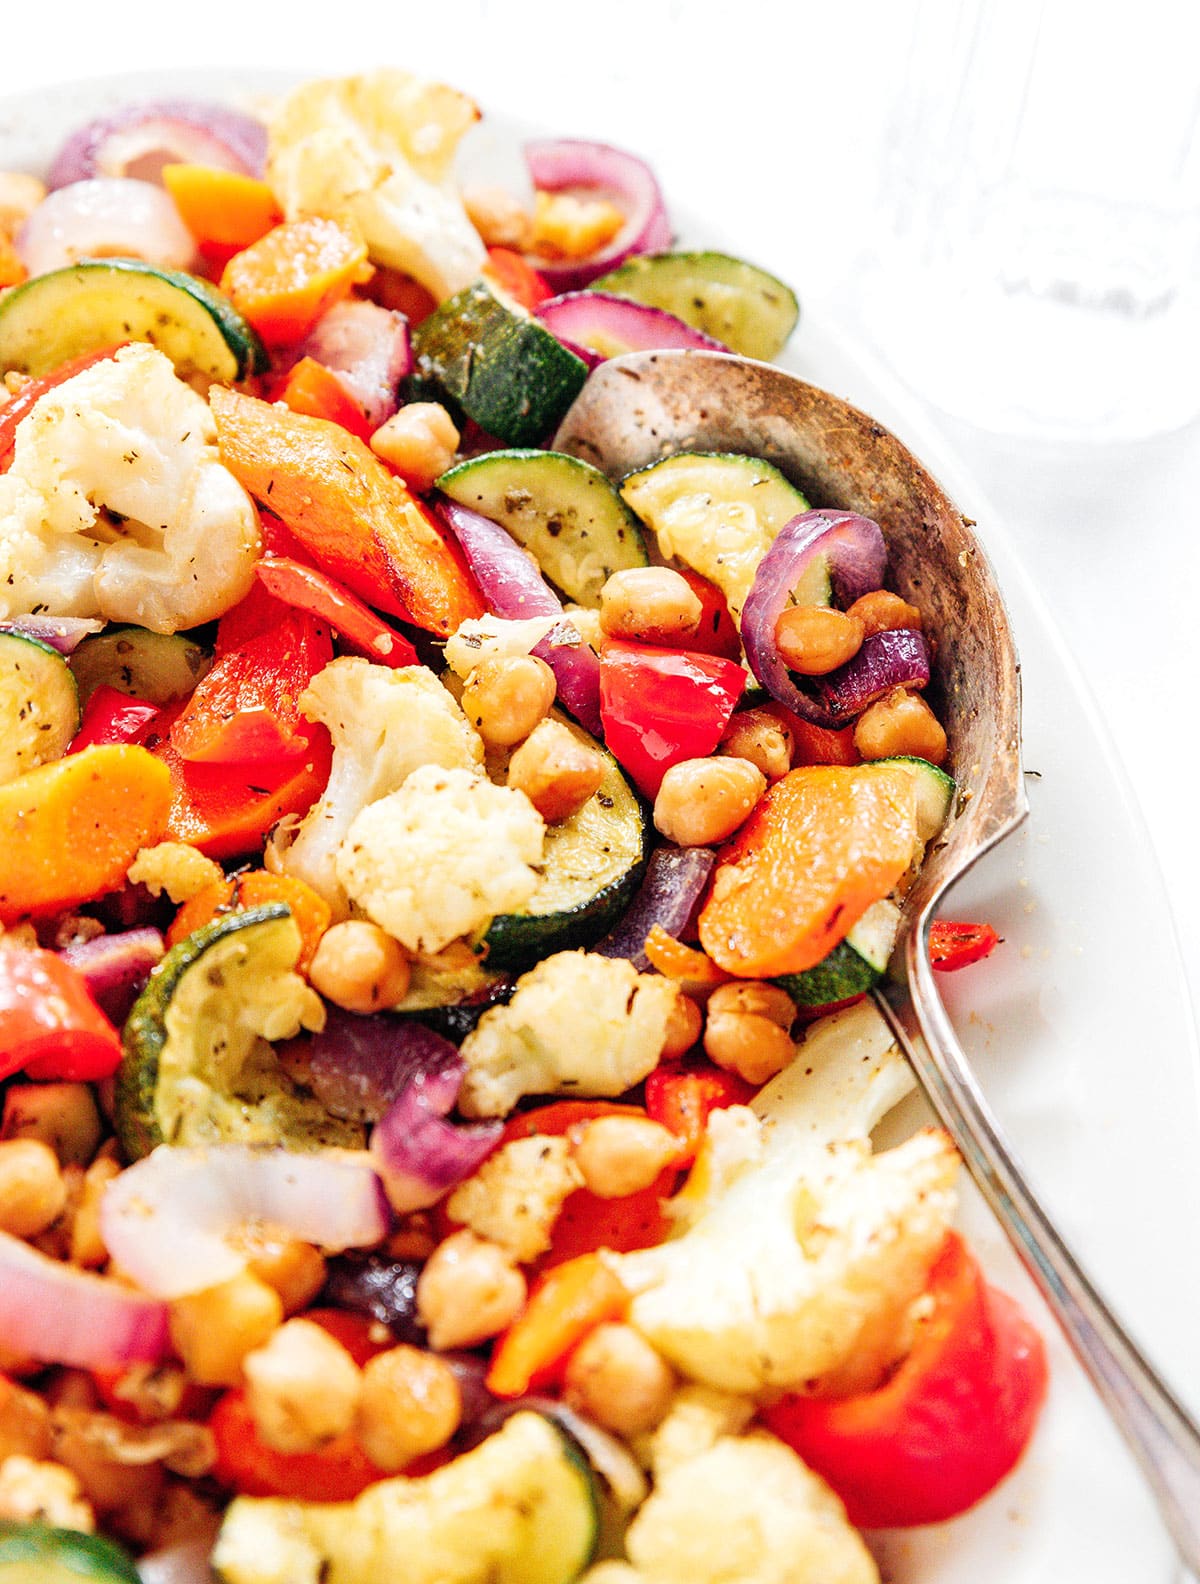 Roasted veggies with Mediterranean seasoning in a serving bowl.